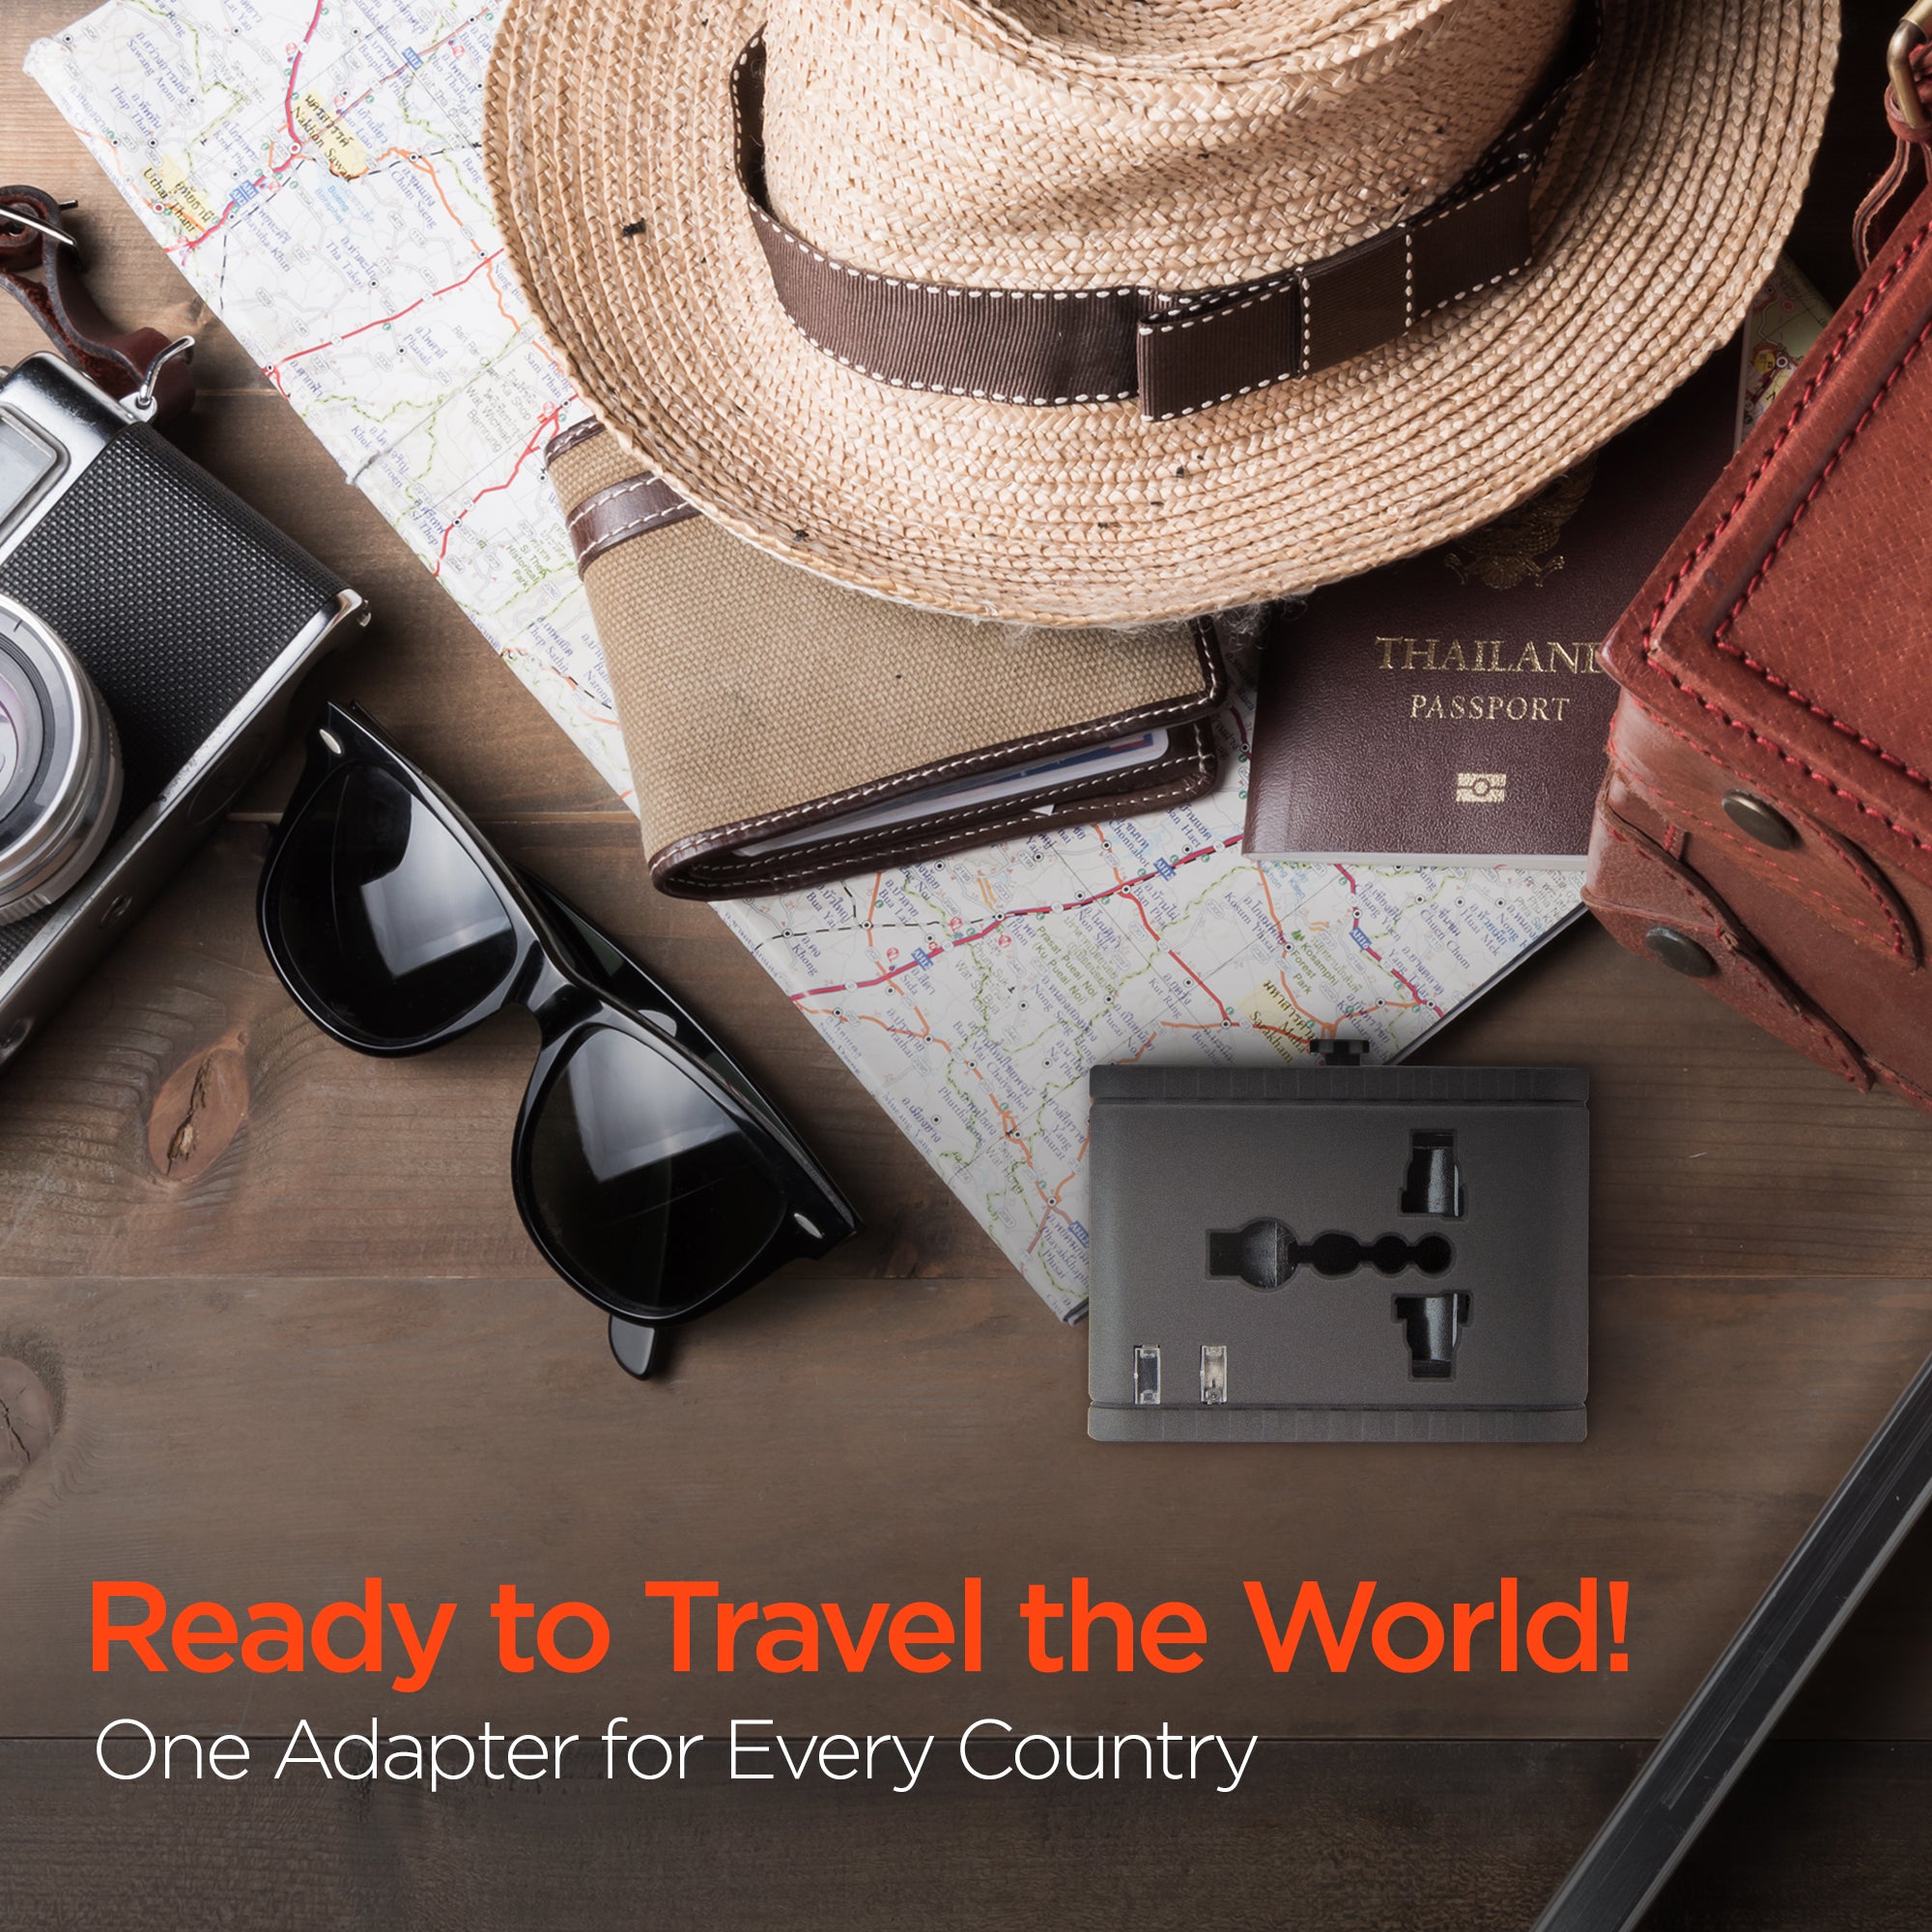 Universal World Wide Travel Charger Adapter Plug - Sabai Technology